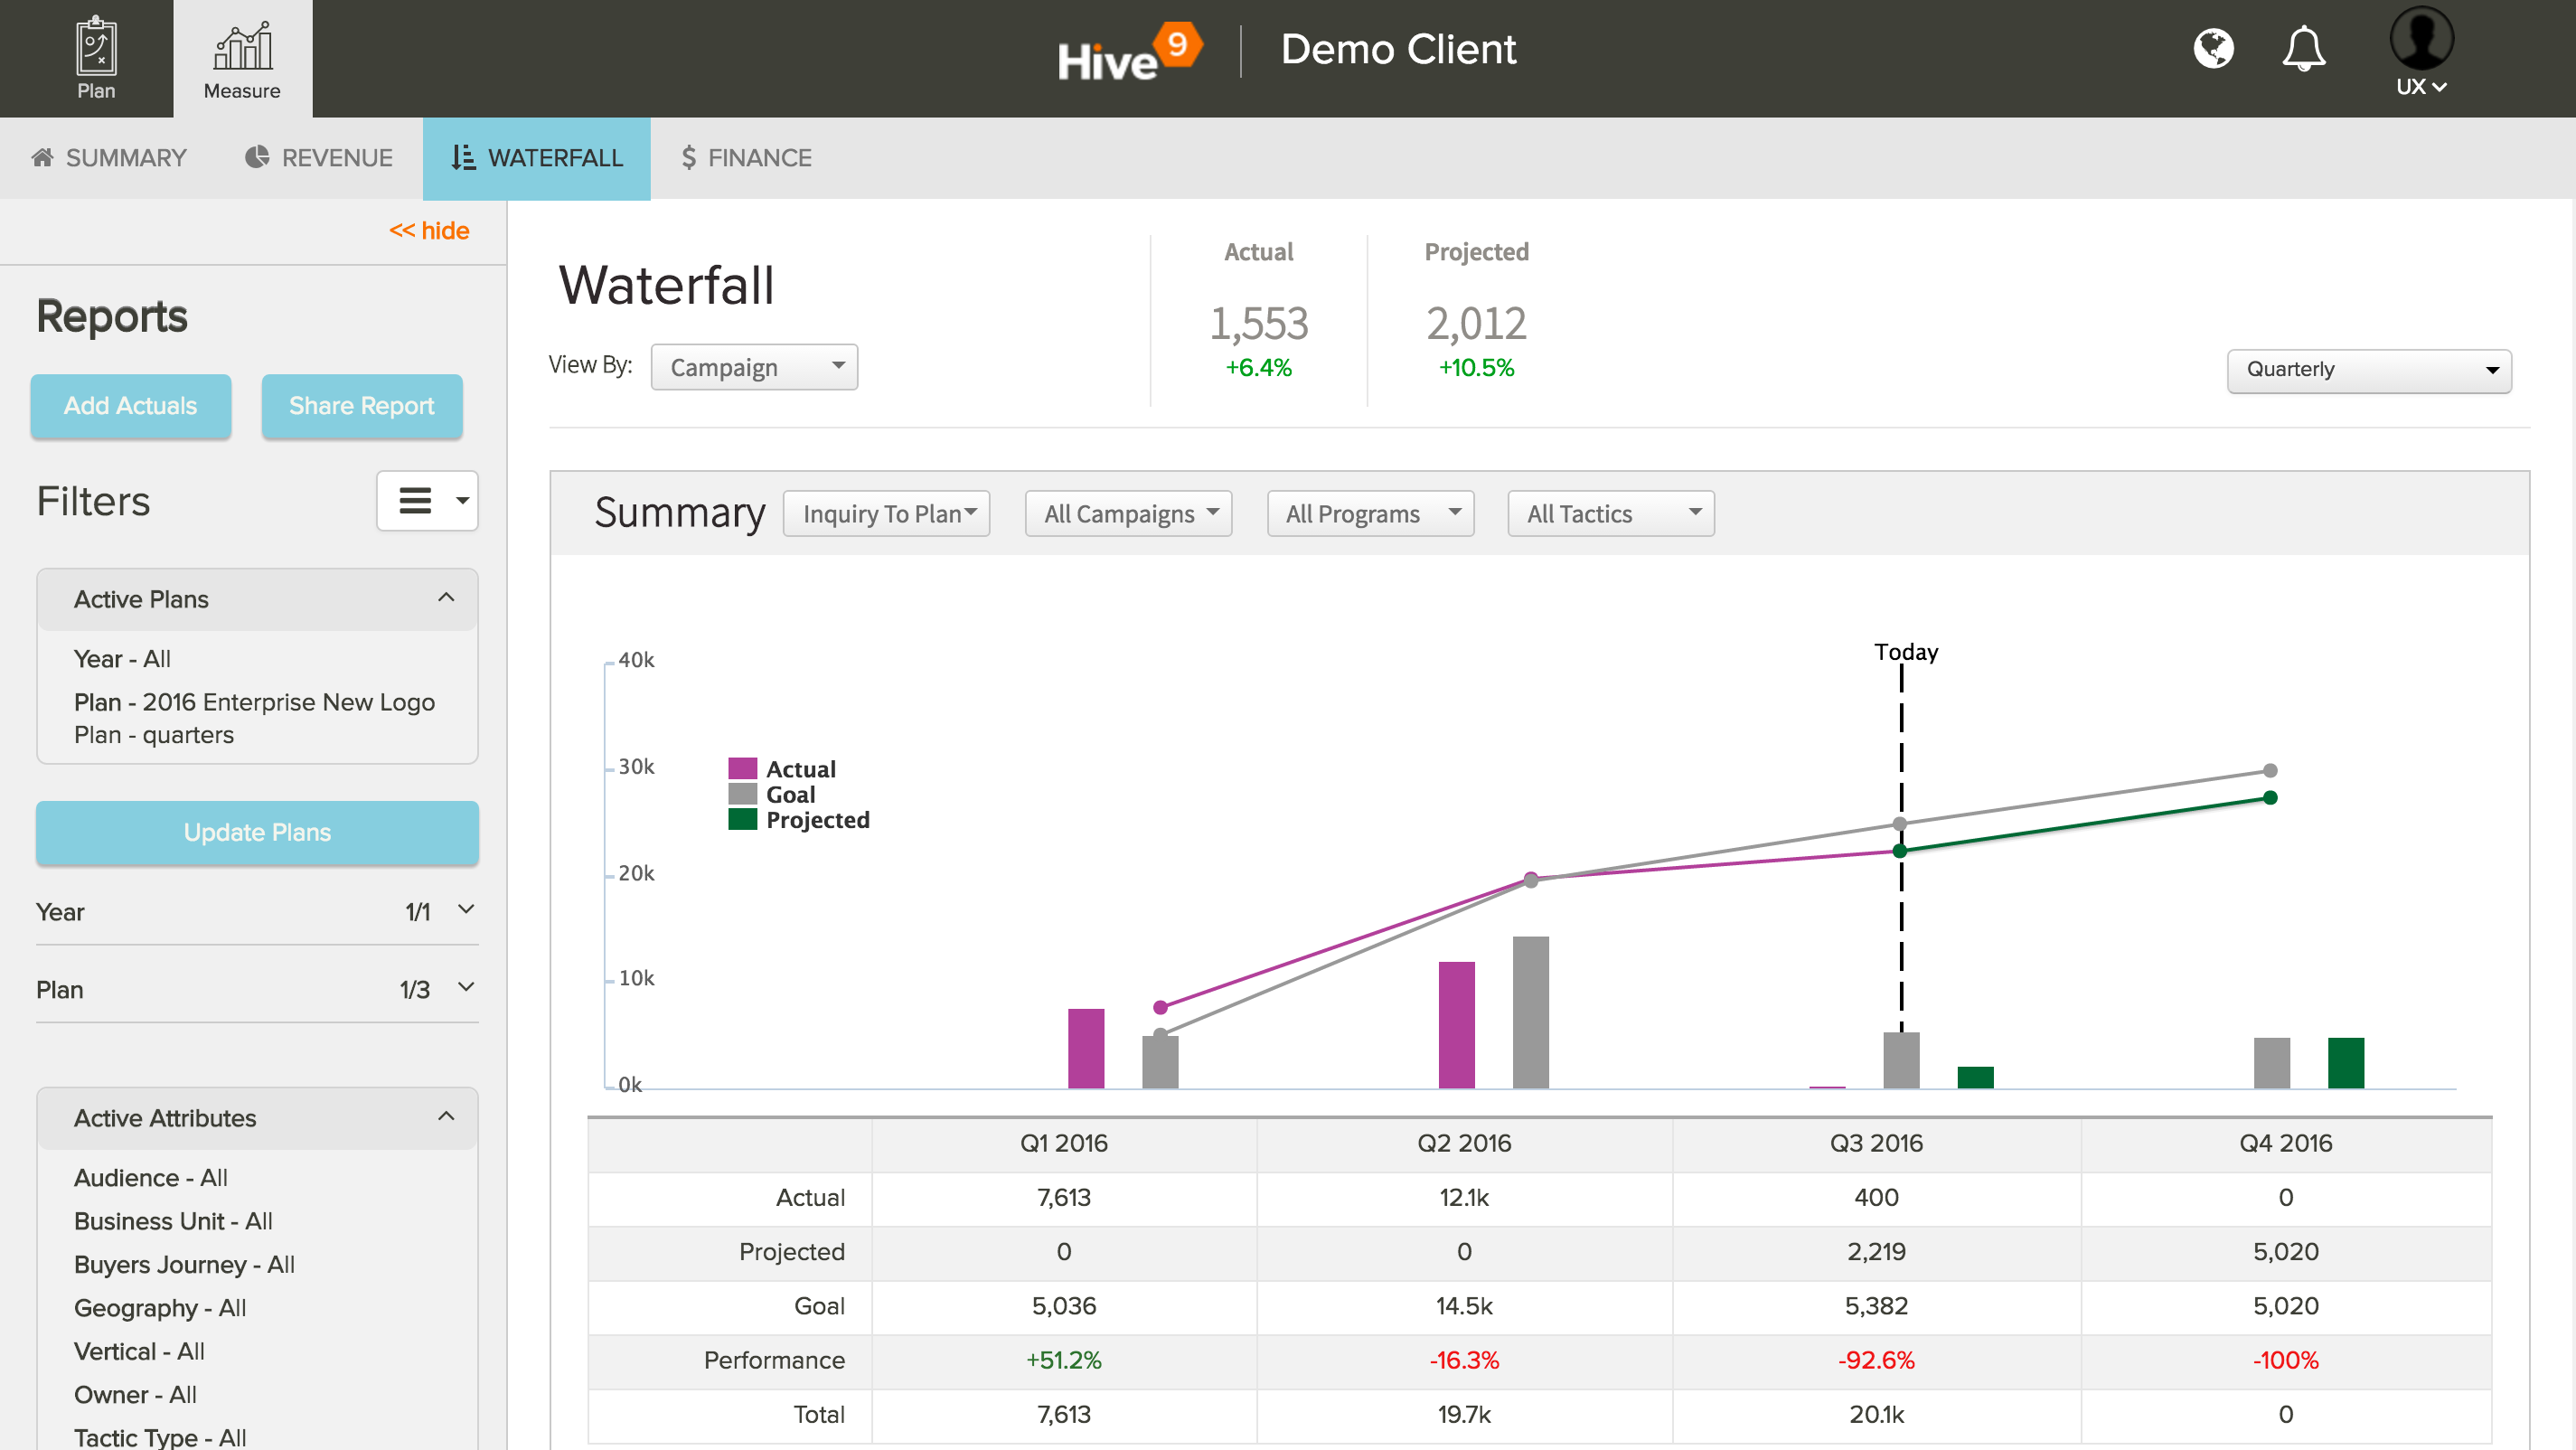 Hive9 Software - Hive9 waterfall analysis